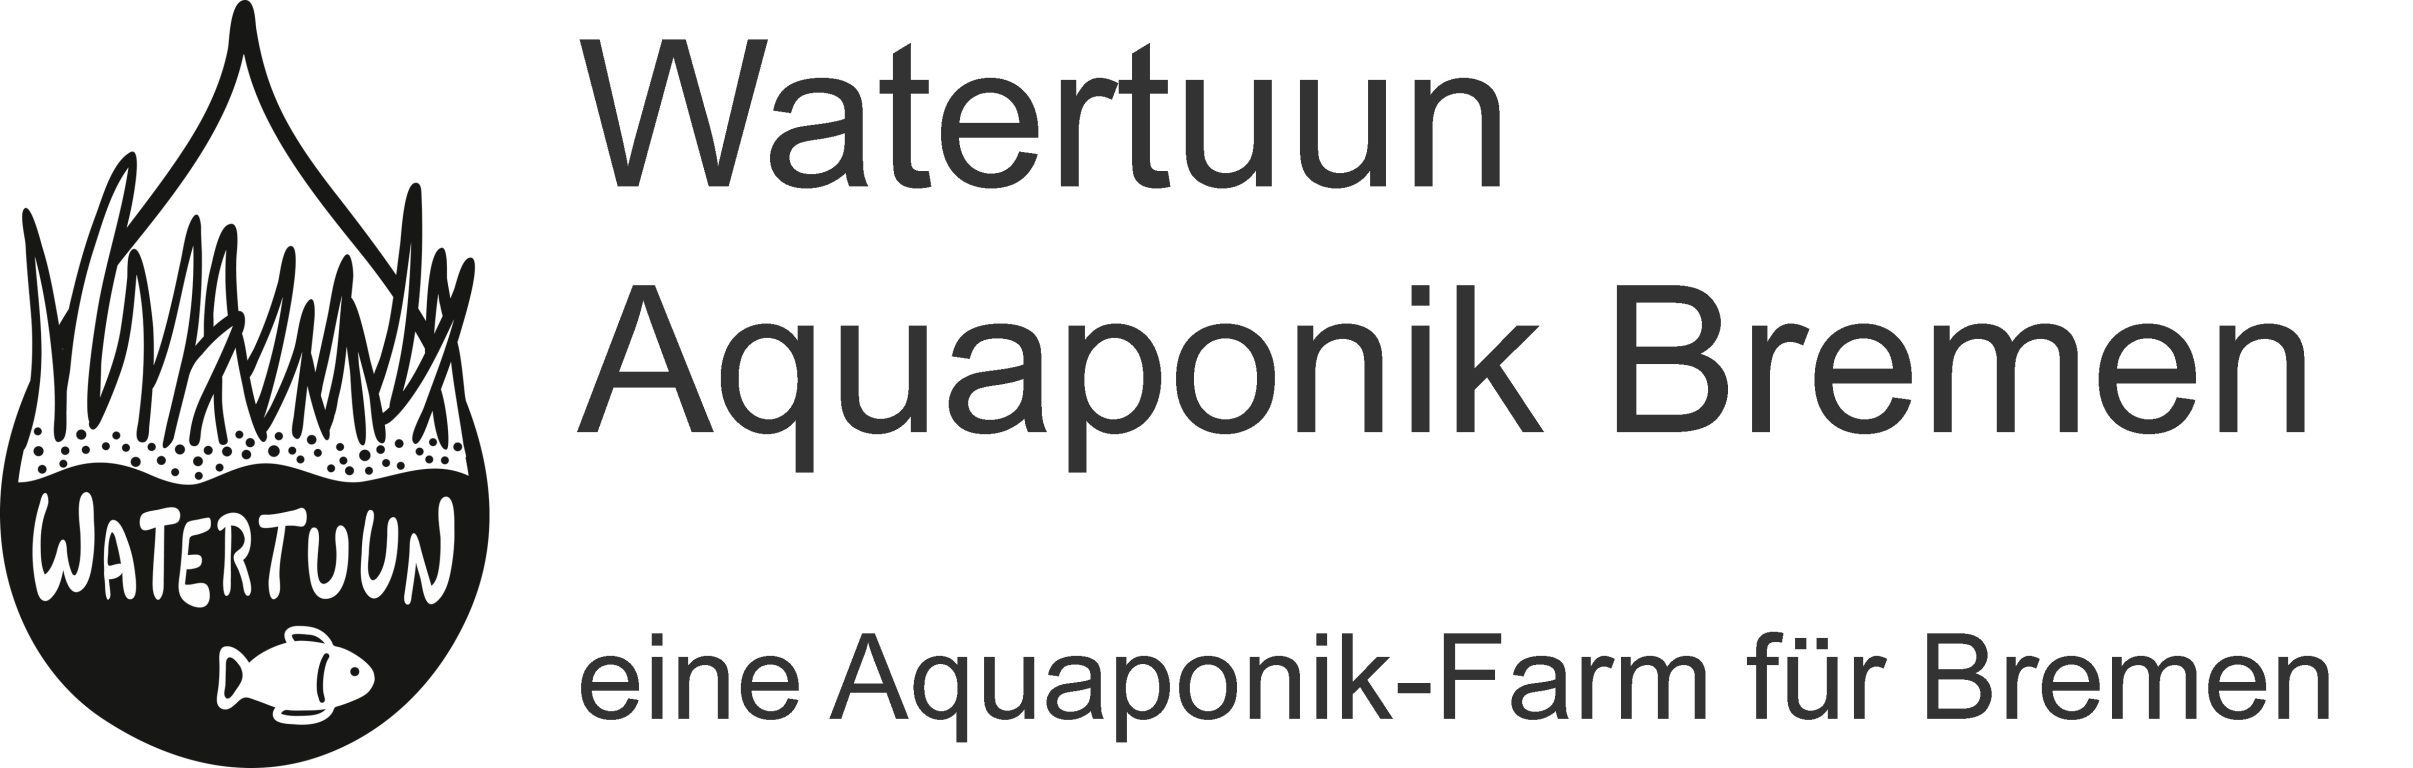 Watertuun – Aquaponik Bremen